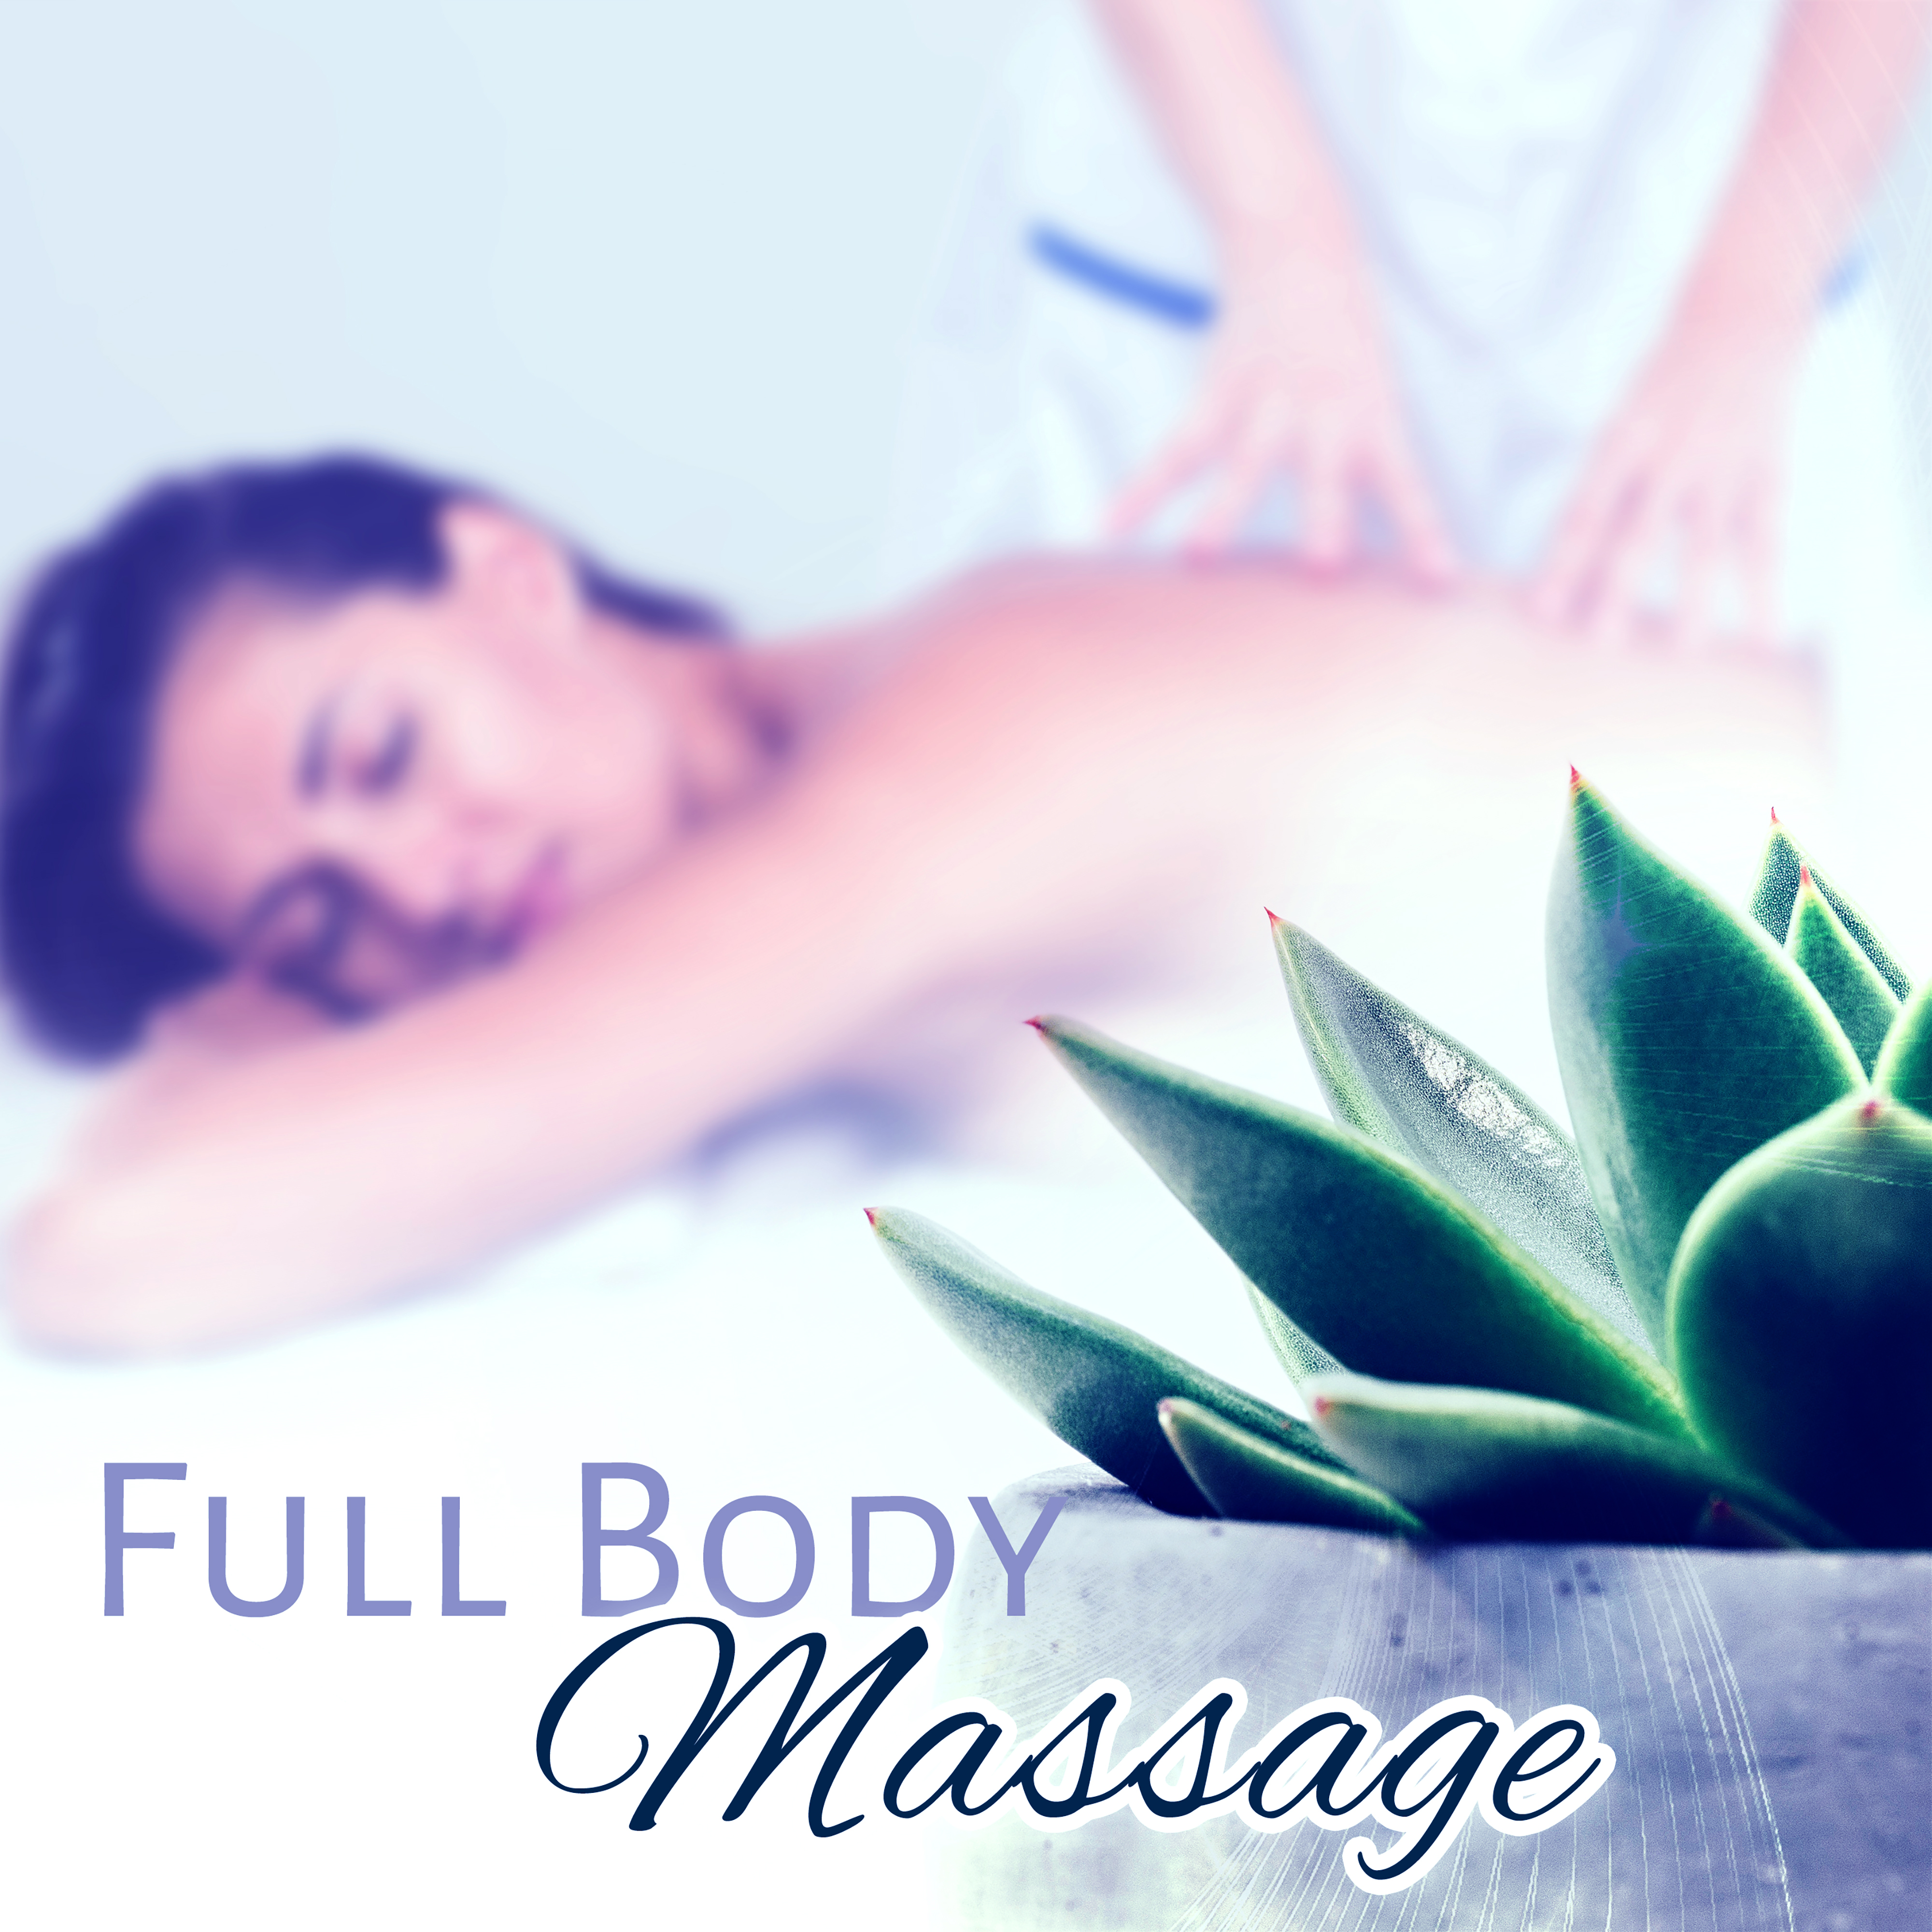 Full Body Massage – Calming Nature Sounds, Spa Music, Wellness, New Age for Spa, Zen Music for Healing Massage, Instrumental Music